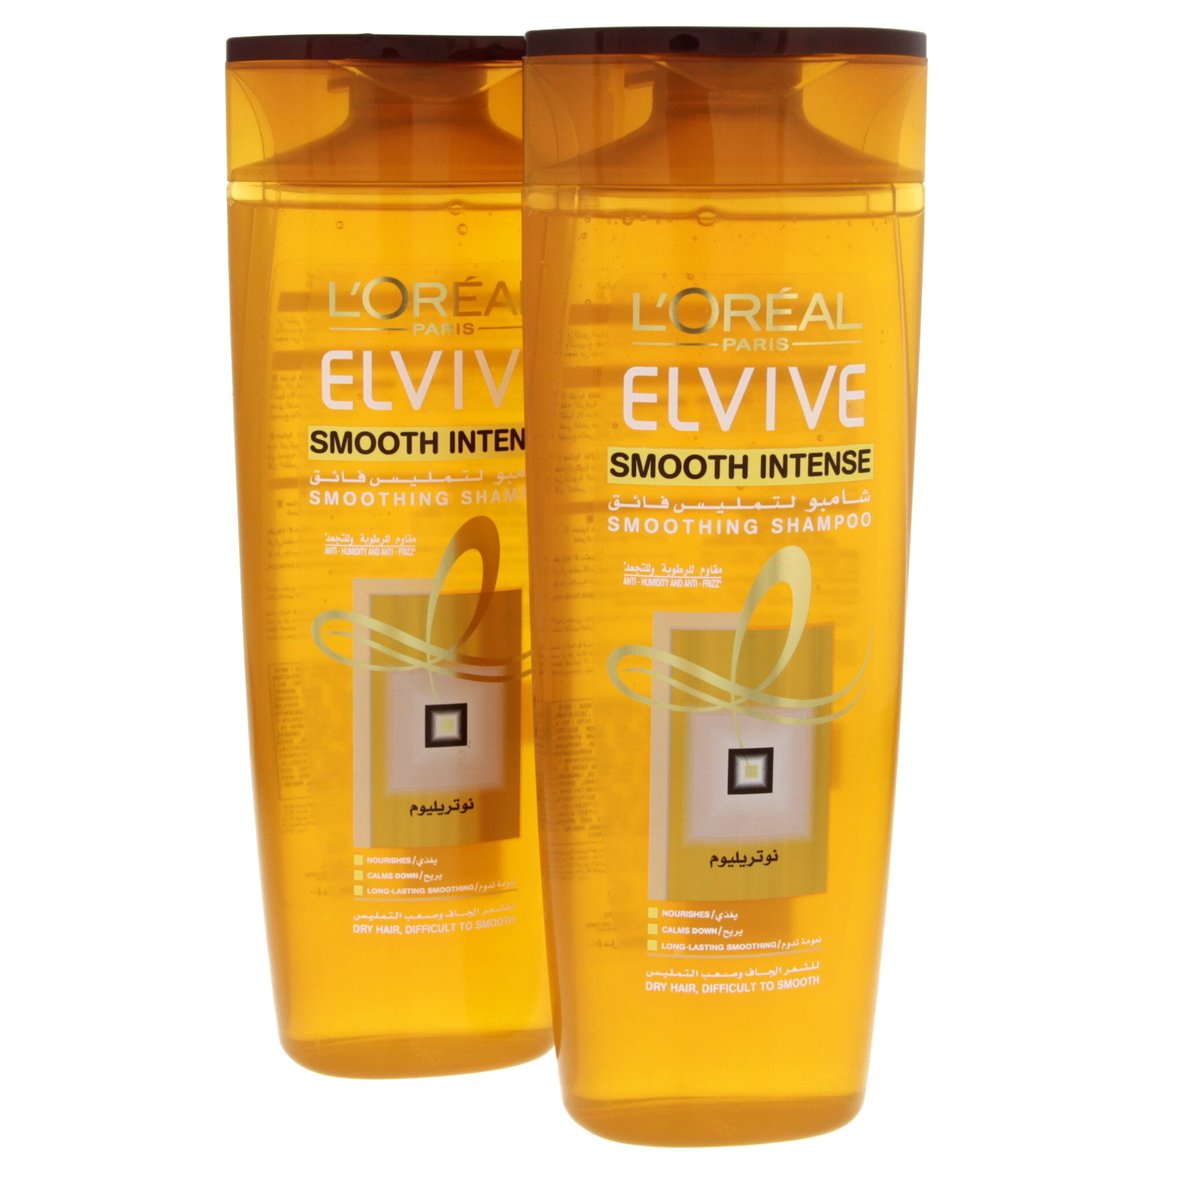 L'Oreal Elvive Smooth Intense Smoothing Shampoo 2 x 400 ml